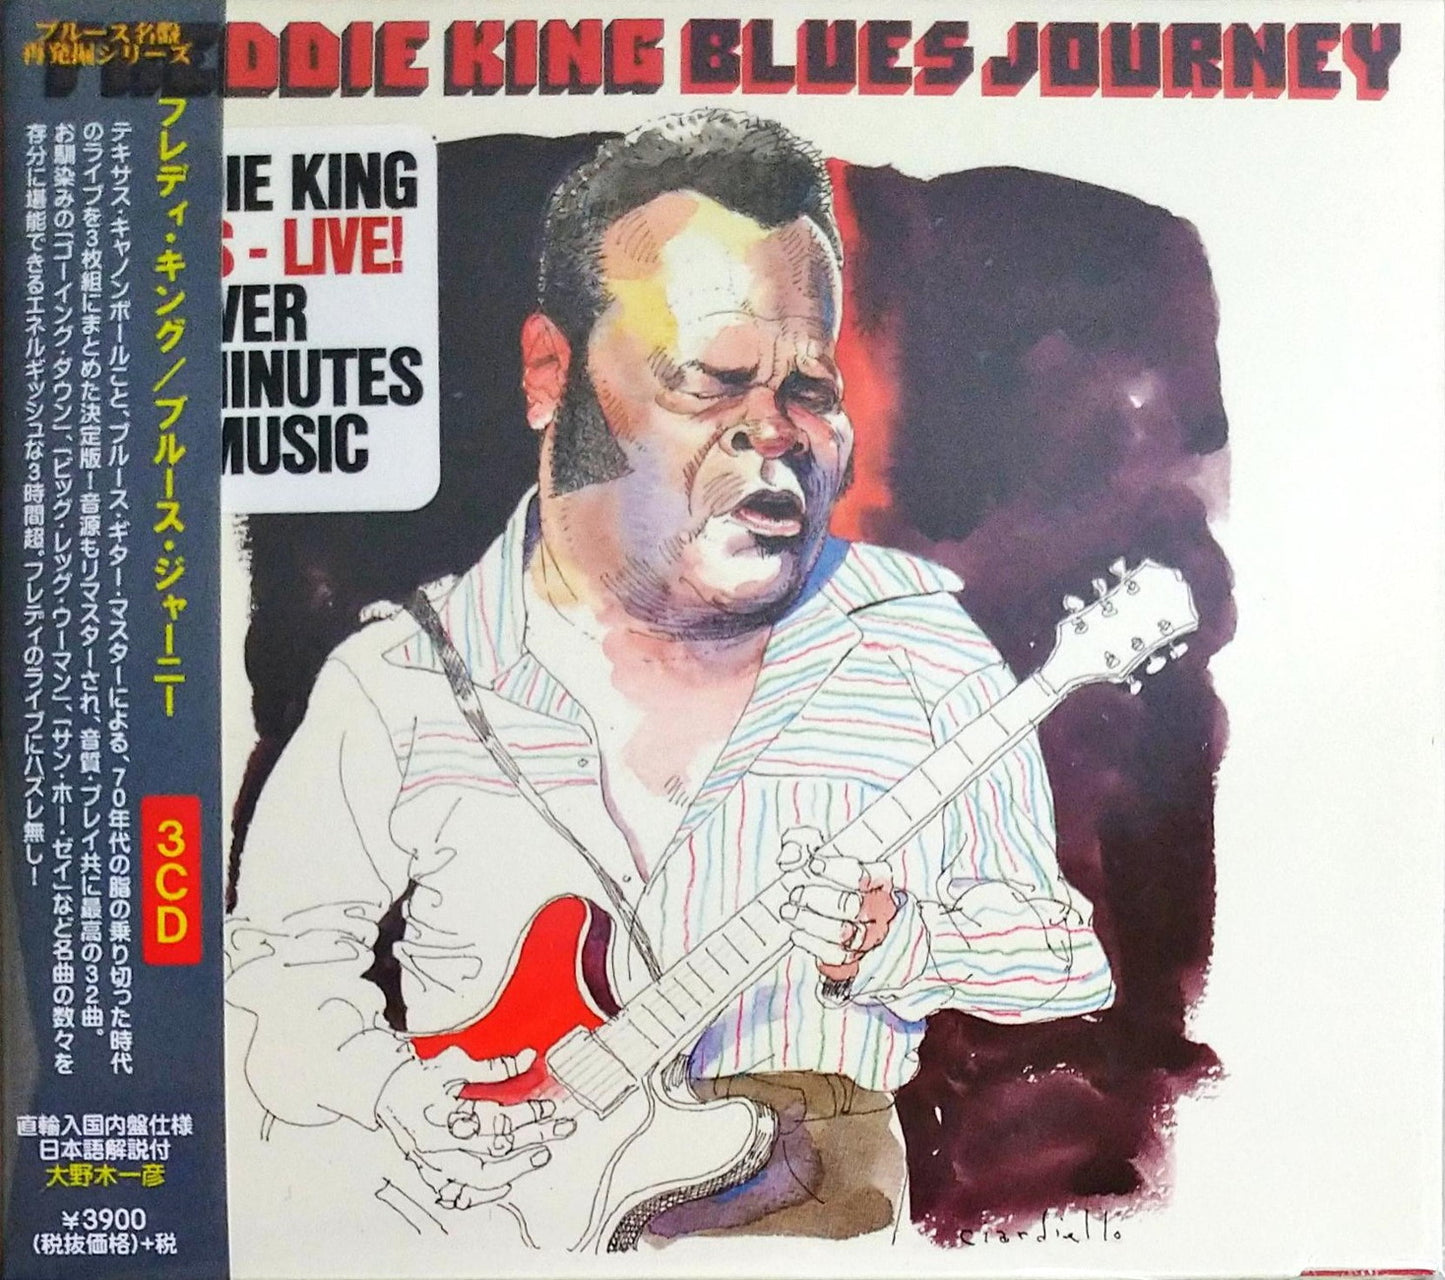 Freddie King - Blues Journey - 3 CD Import